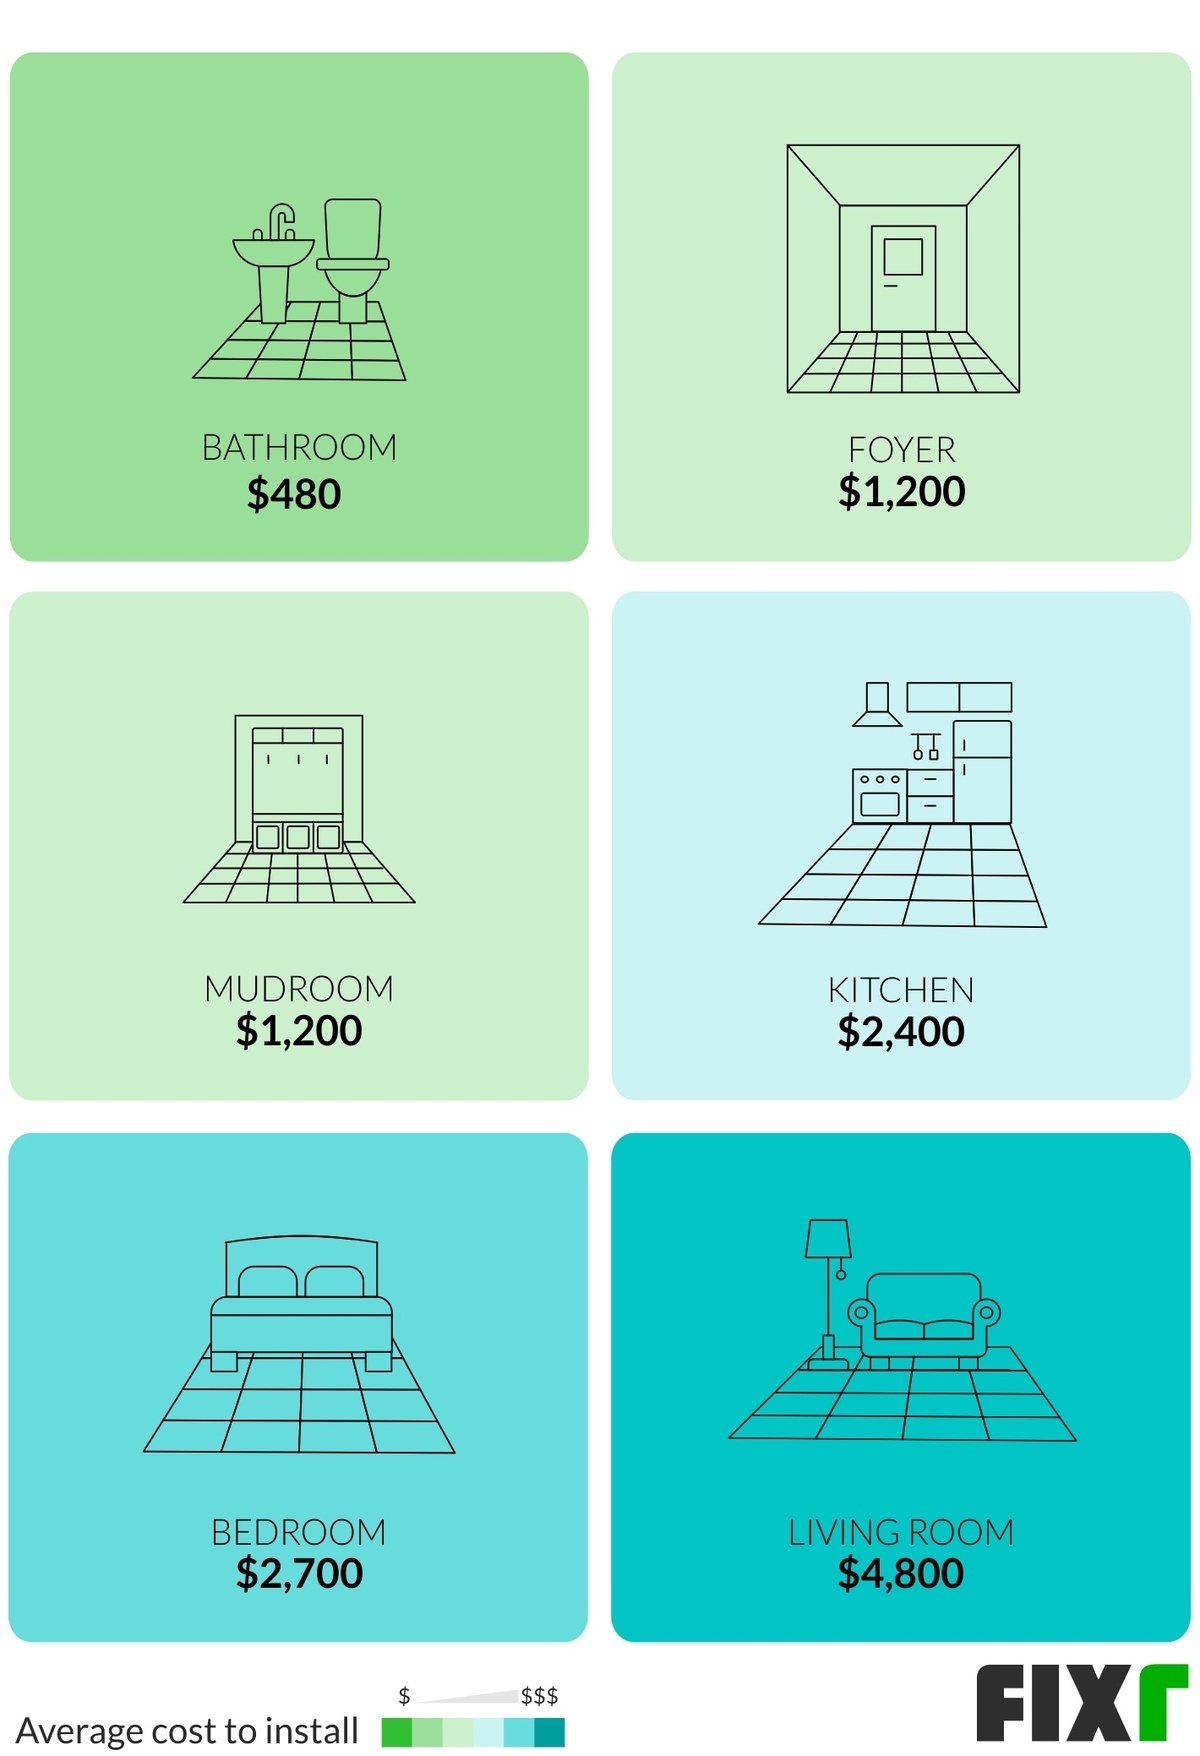 Ceramic Tile Flooring Installation Cost, Average Cost To Replace Bathroom Floor